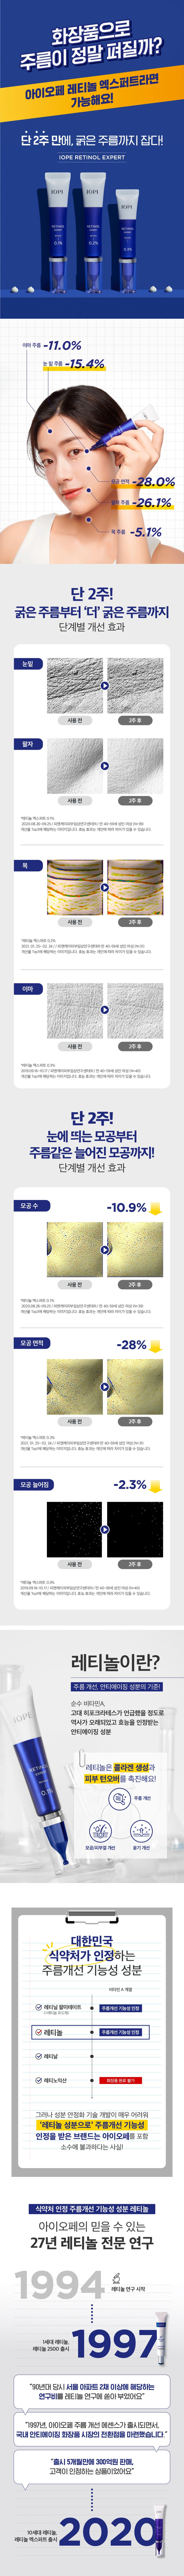 IOPE Retinol Expert 0.2% korean skincare product online sho malaysia China italy1